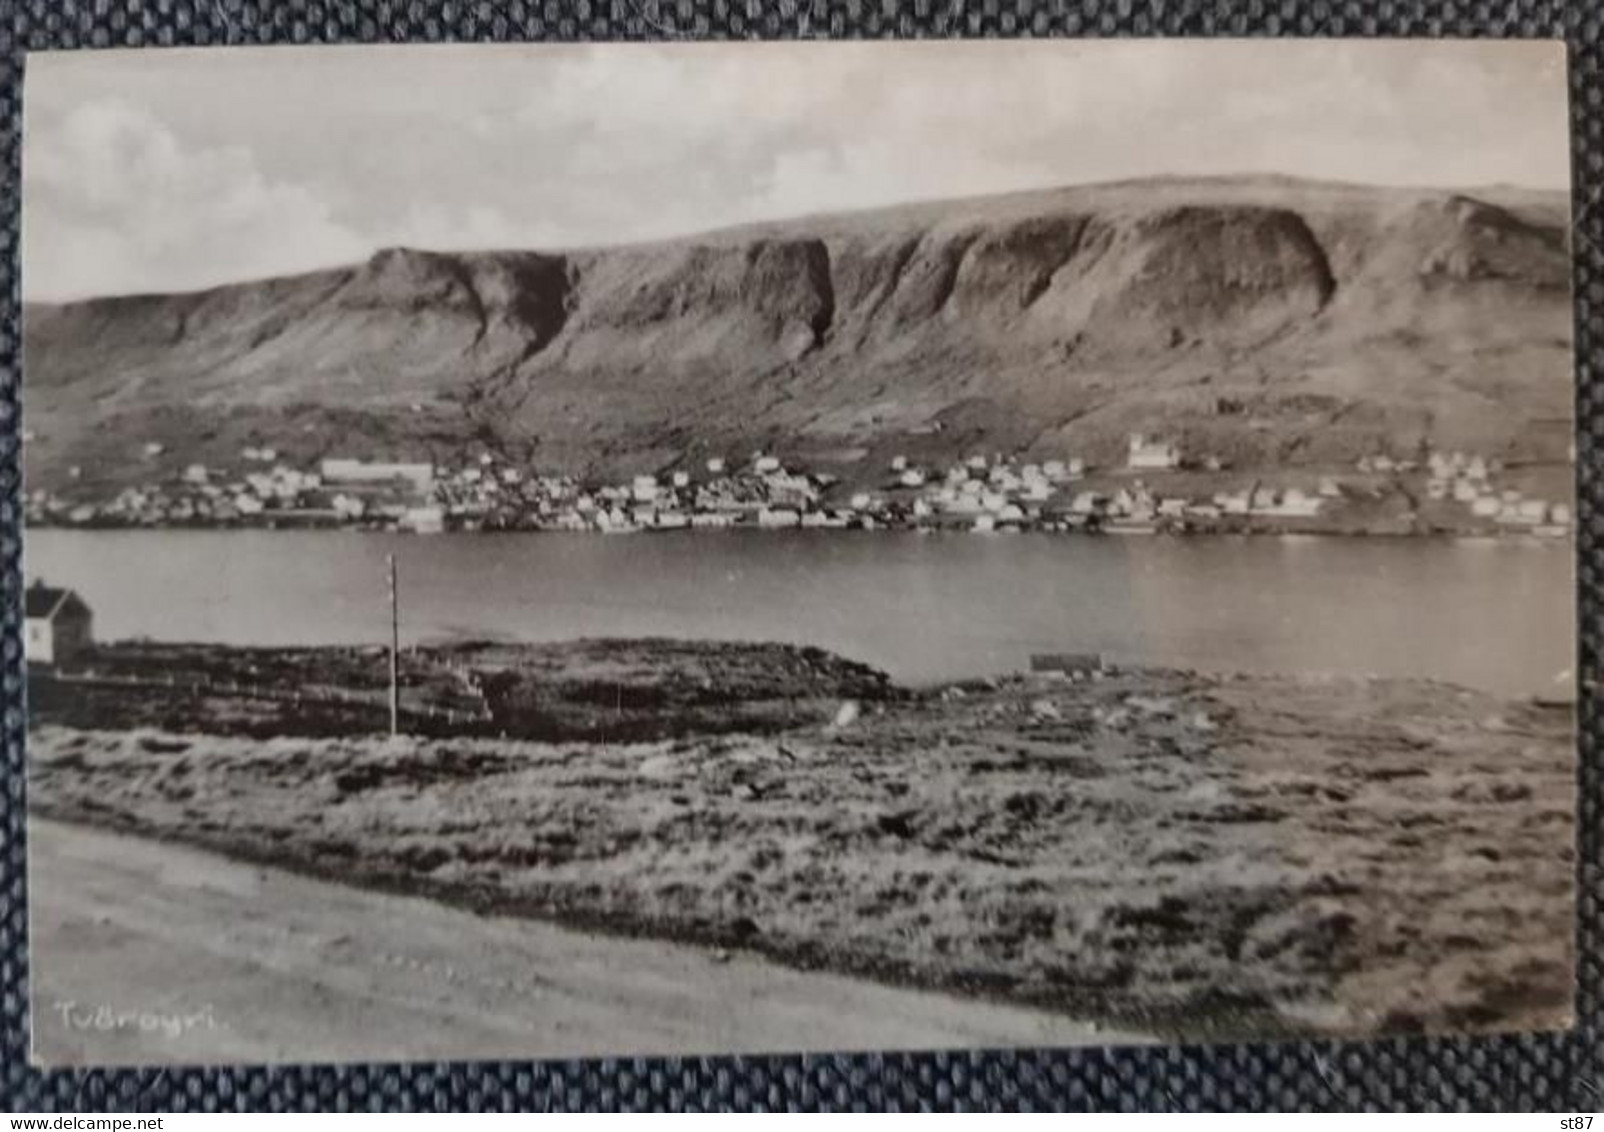 Faroe Tvöroyri - Faroe Islands